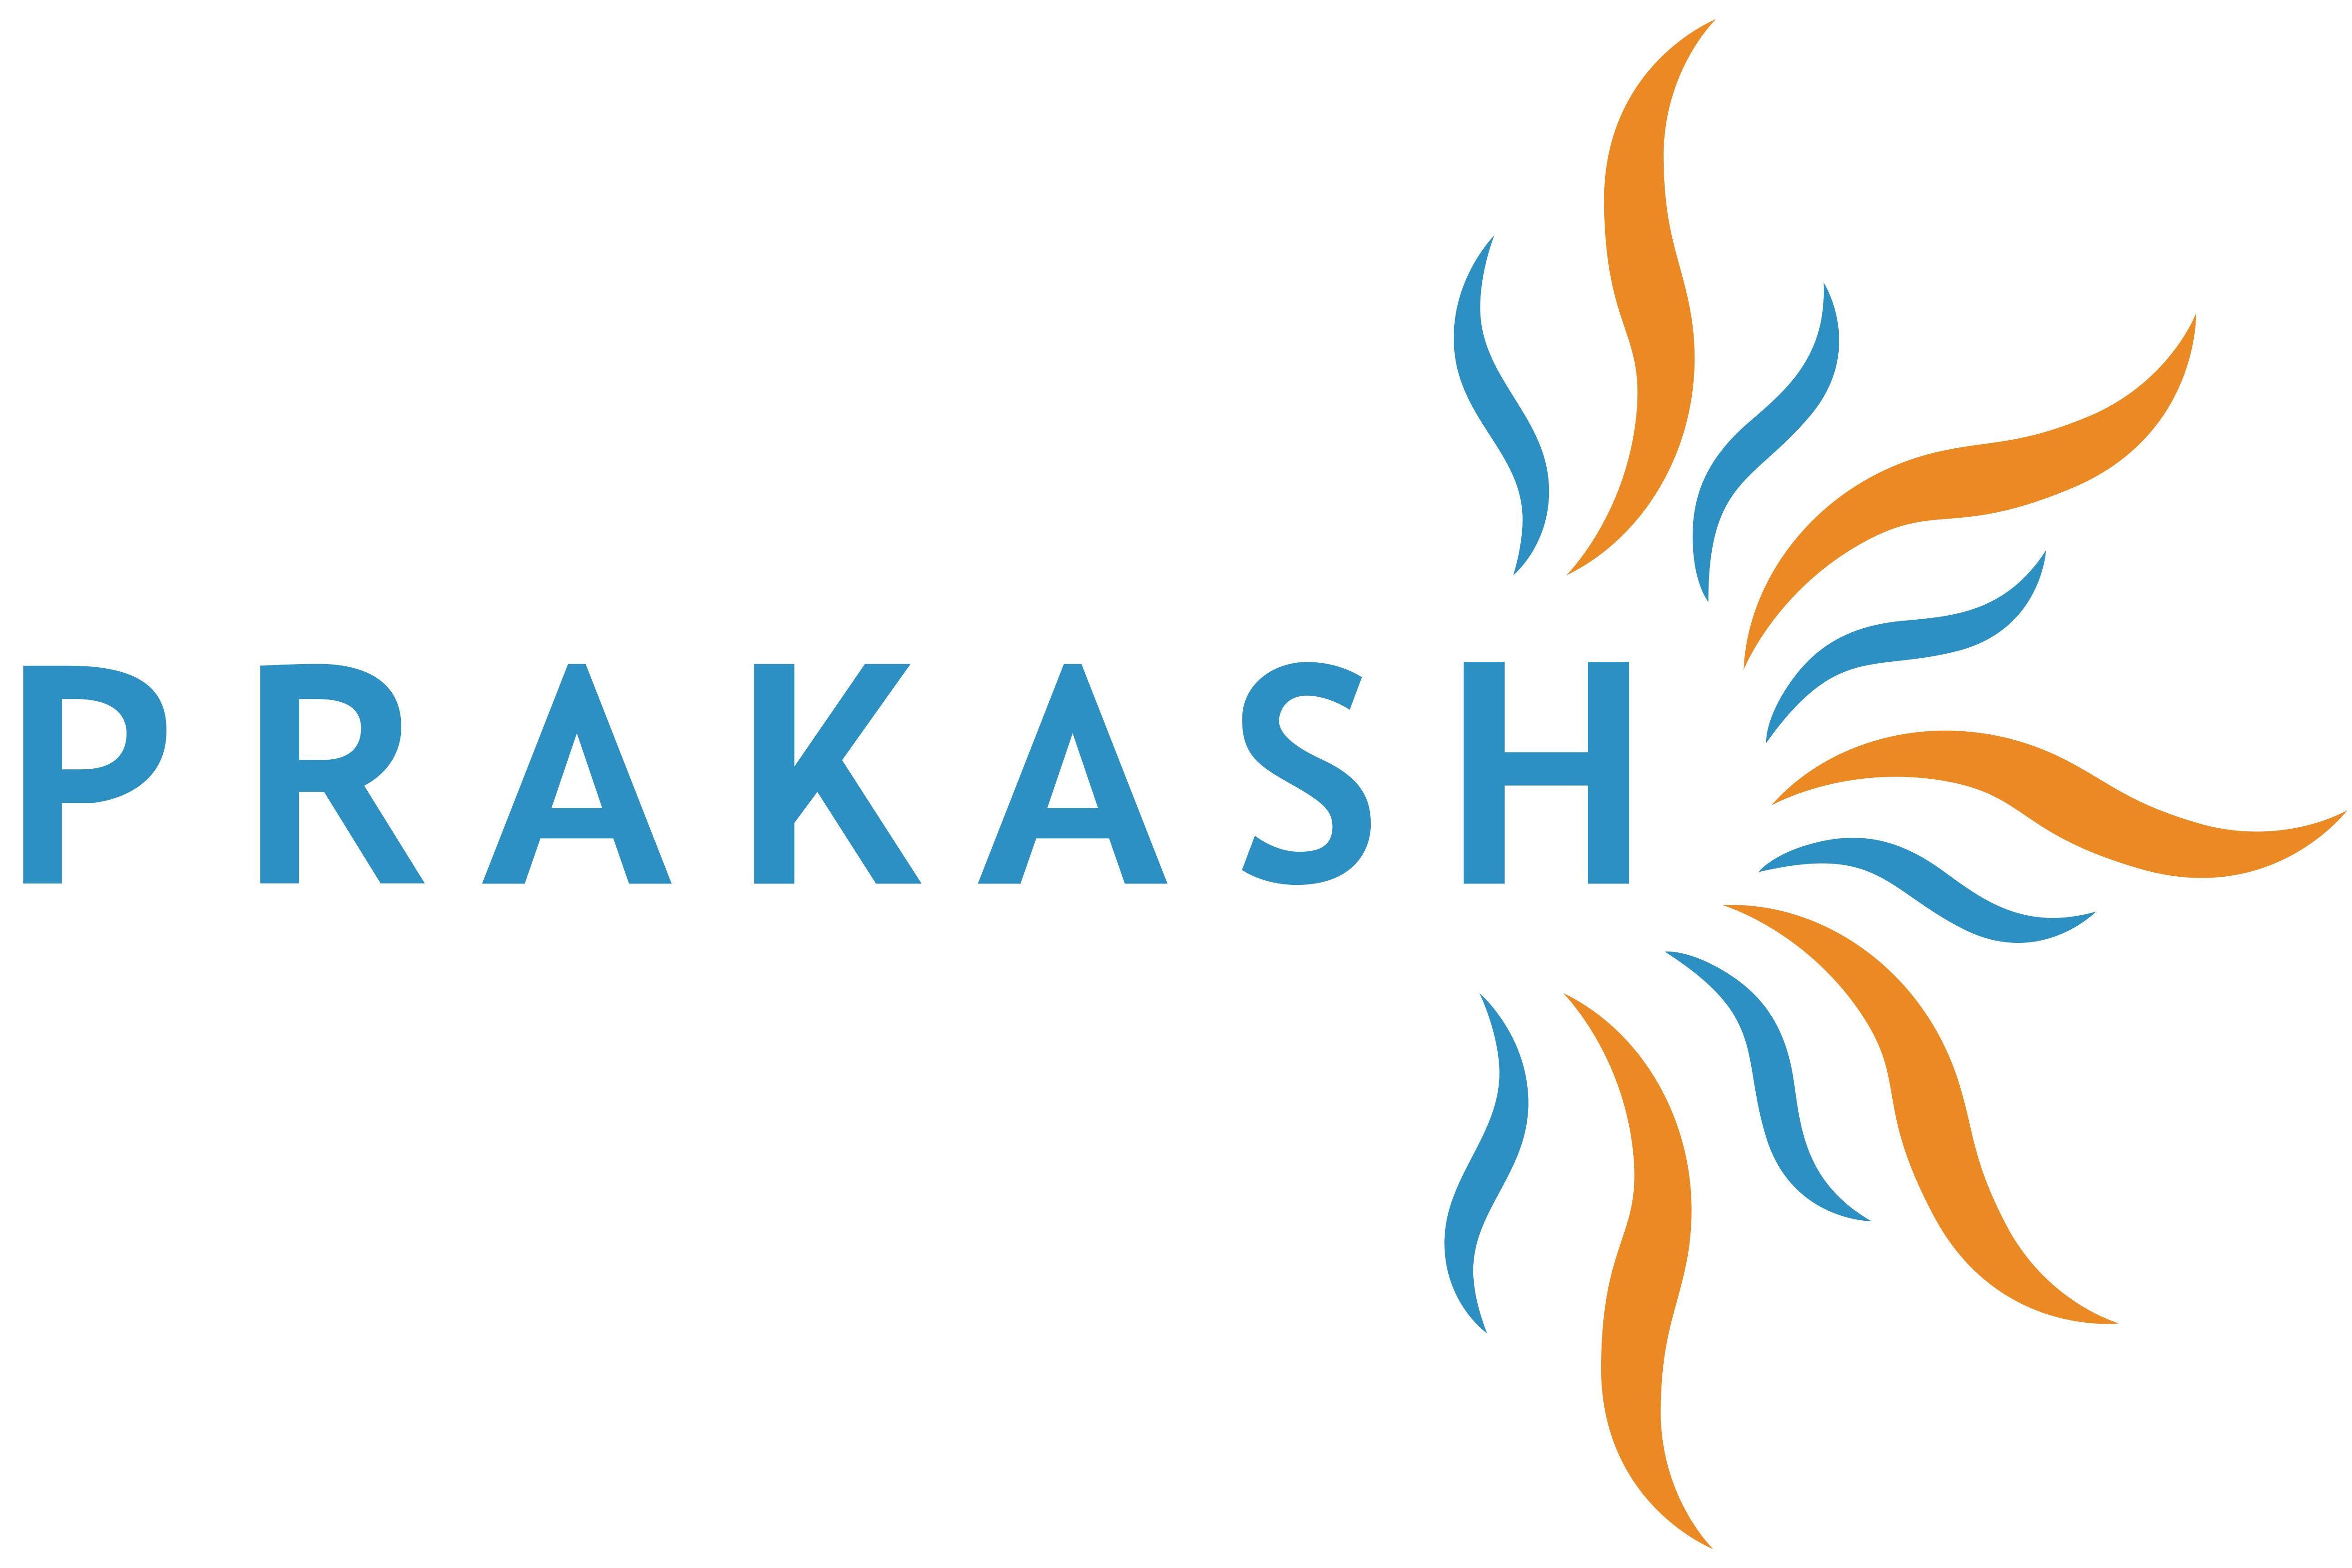 Prakash Software Solutions Pvt Ltd logo